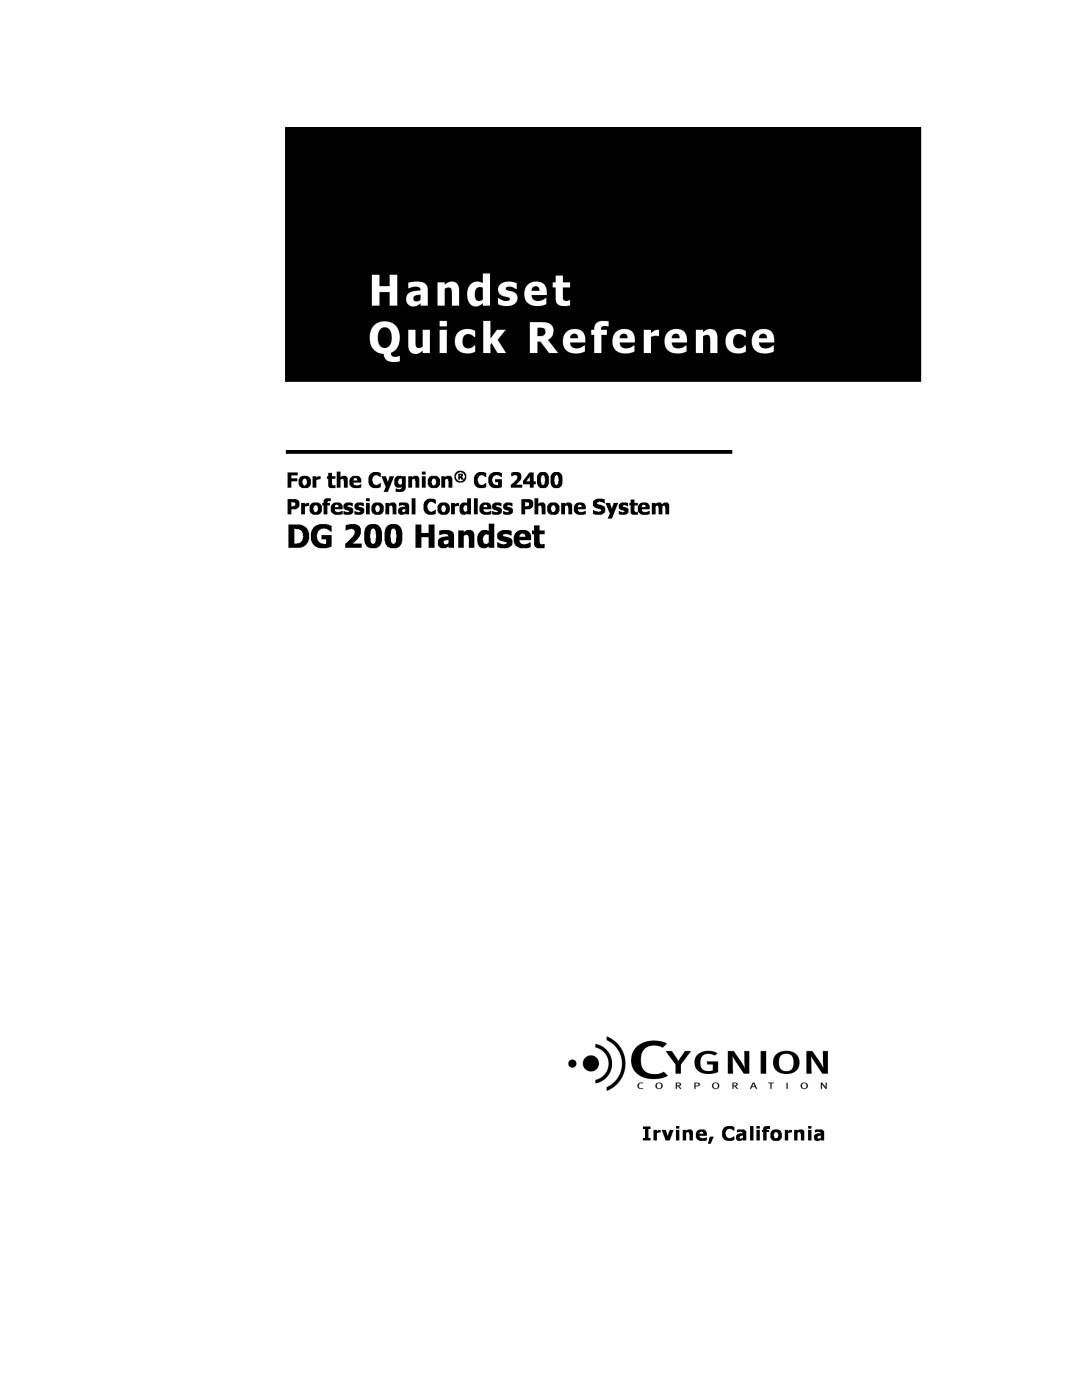 Cygnion CG 2400 manual DG 200 Handset, Irvine, California, Handset Quick Reference 